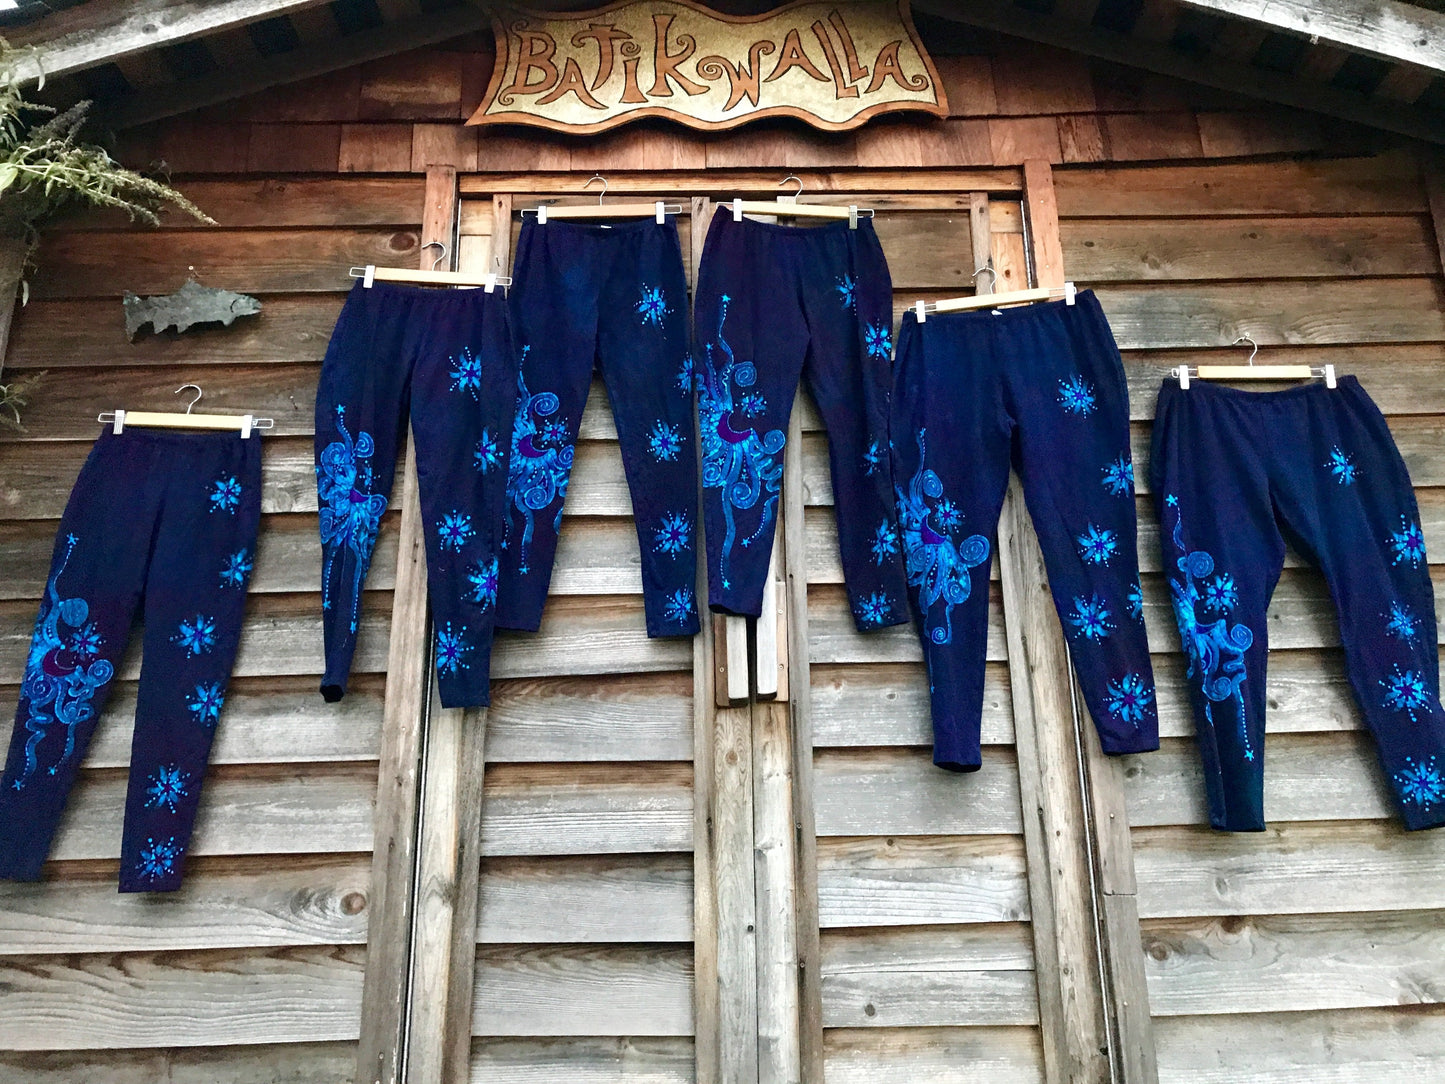 Purple and Turquoise Moon Star Batik Leggings - Size XL Mid Length leggings batikwalla 